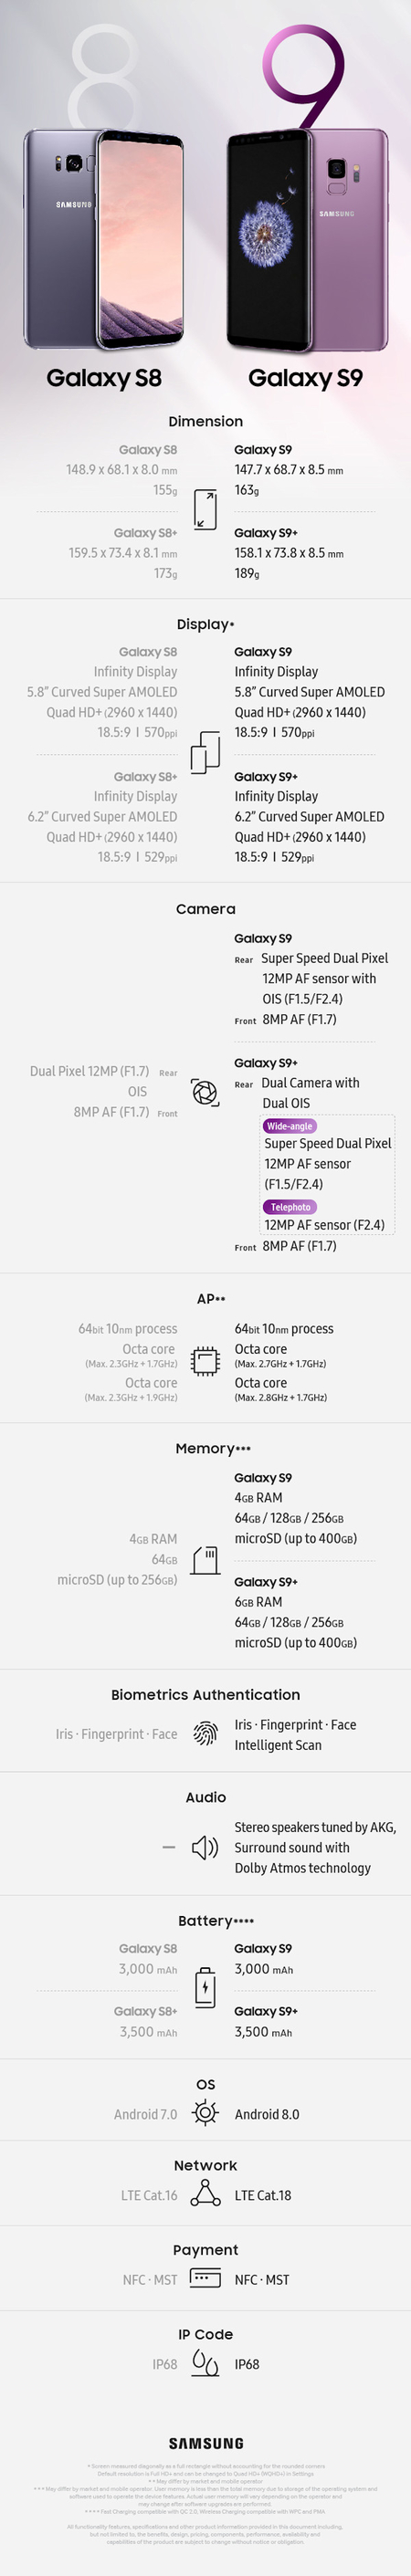 Infographic Samsung Galaxy S8 versus Galaxy S9 
